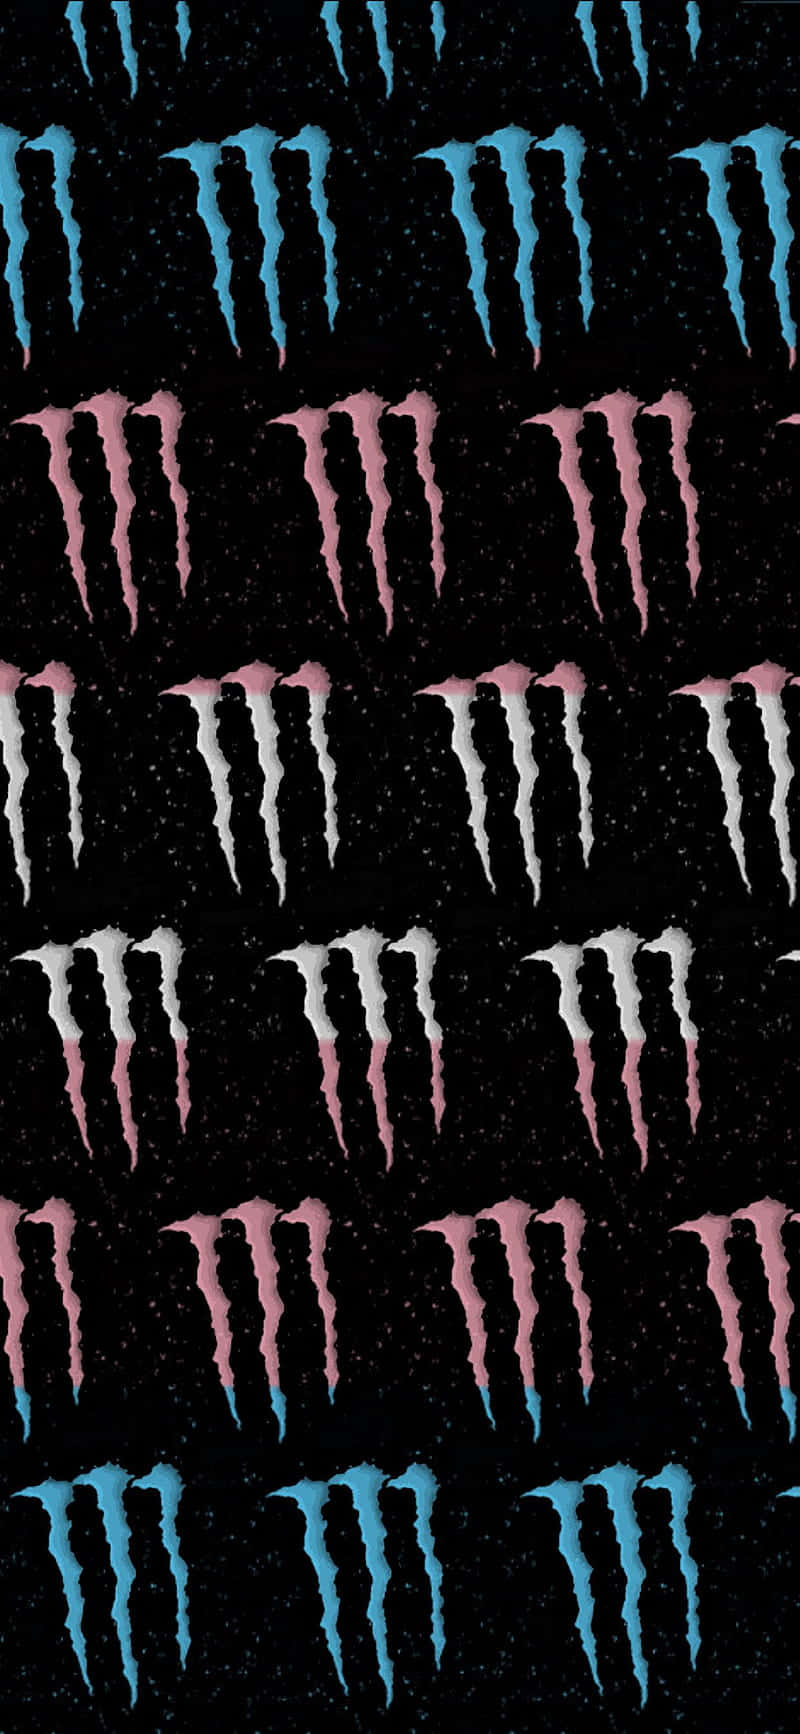 monster logo pink